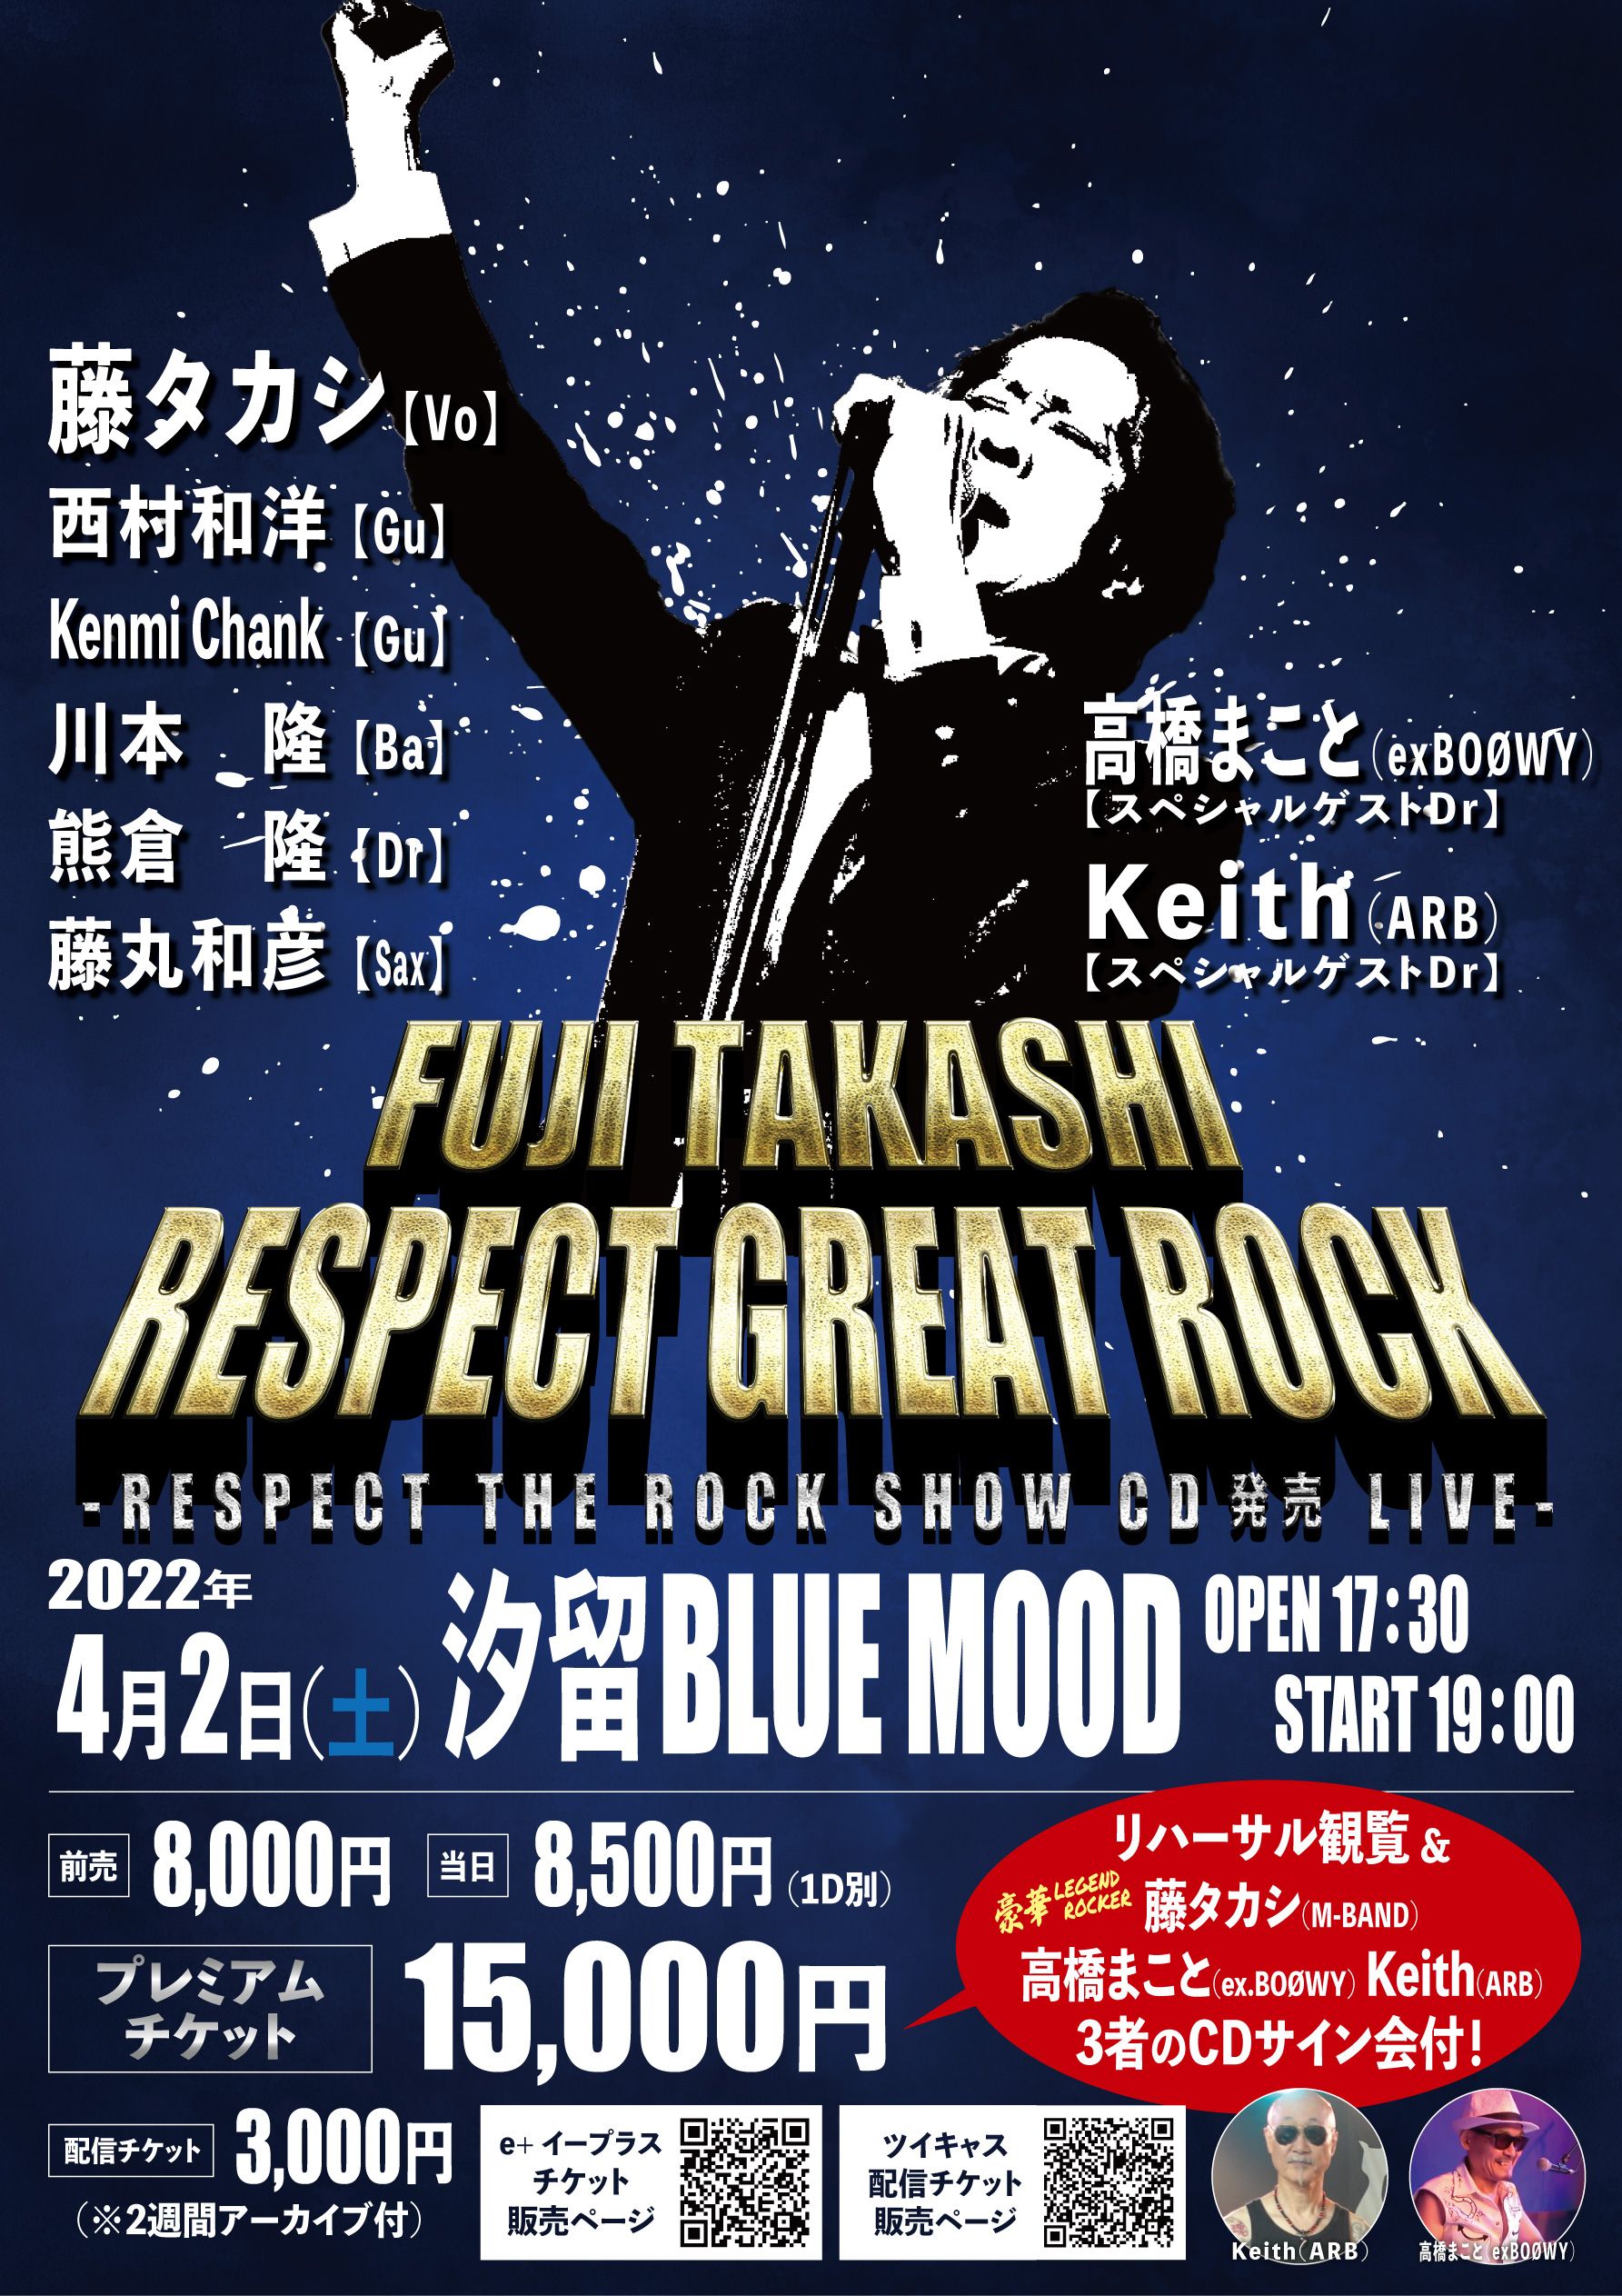 FUJI TAKASHI RESPRCT GRATE ROCK RESPECT THE ROCK SHOW CD発売 LIVE @ 汐留BLU MODE | 中央区 | 東京都 | 日本